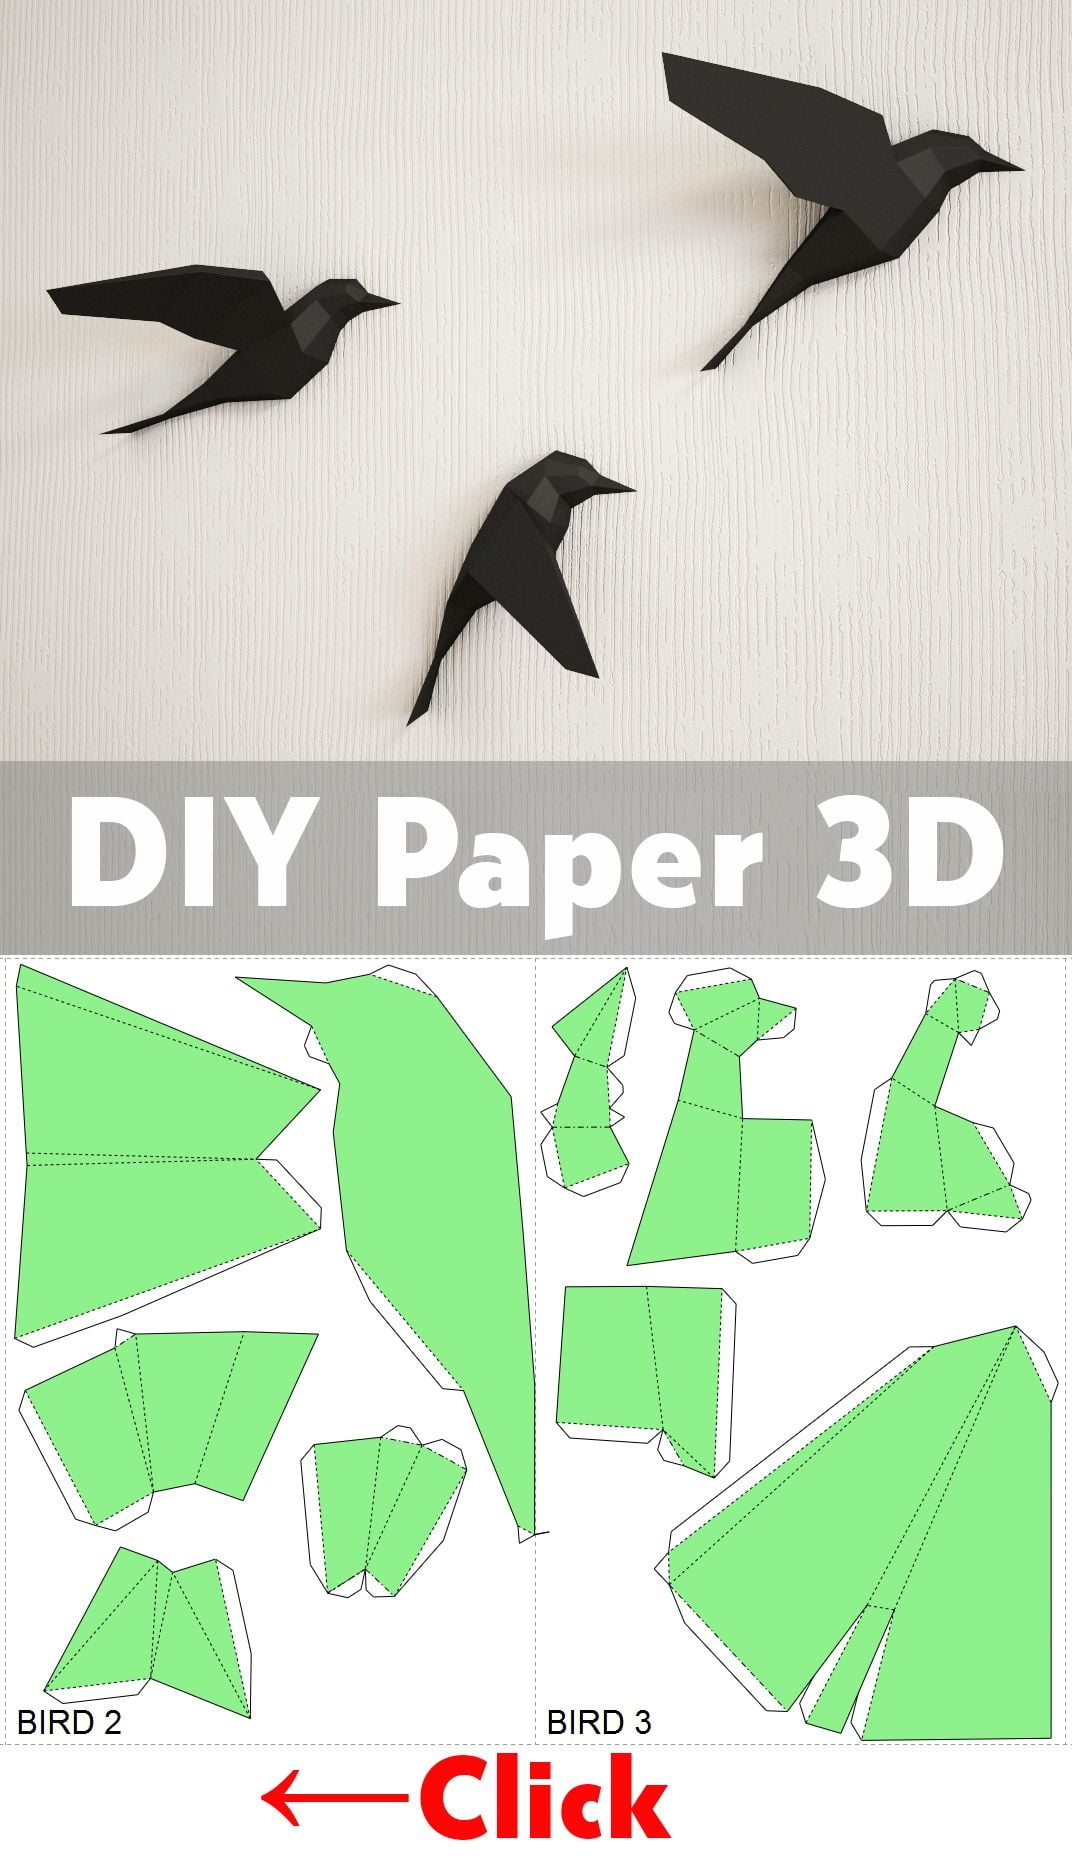 3D Papercraft Birds On Wall DIY Paper Model Sculpture Etsy Paper Birds Diy Paper Paper Crafts Diy